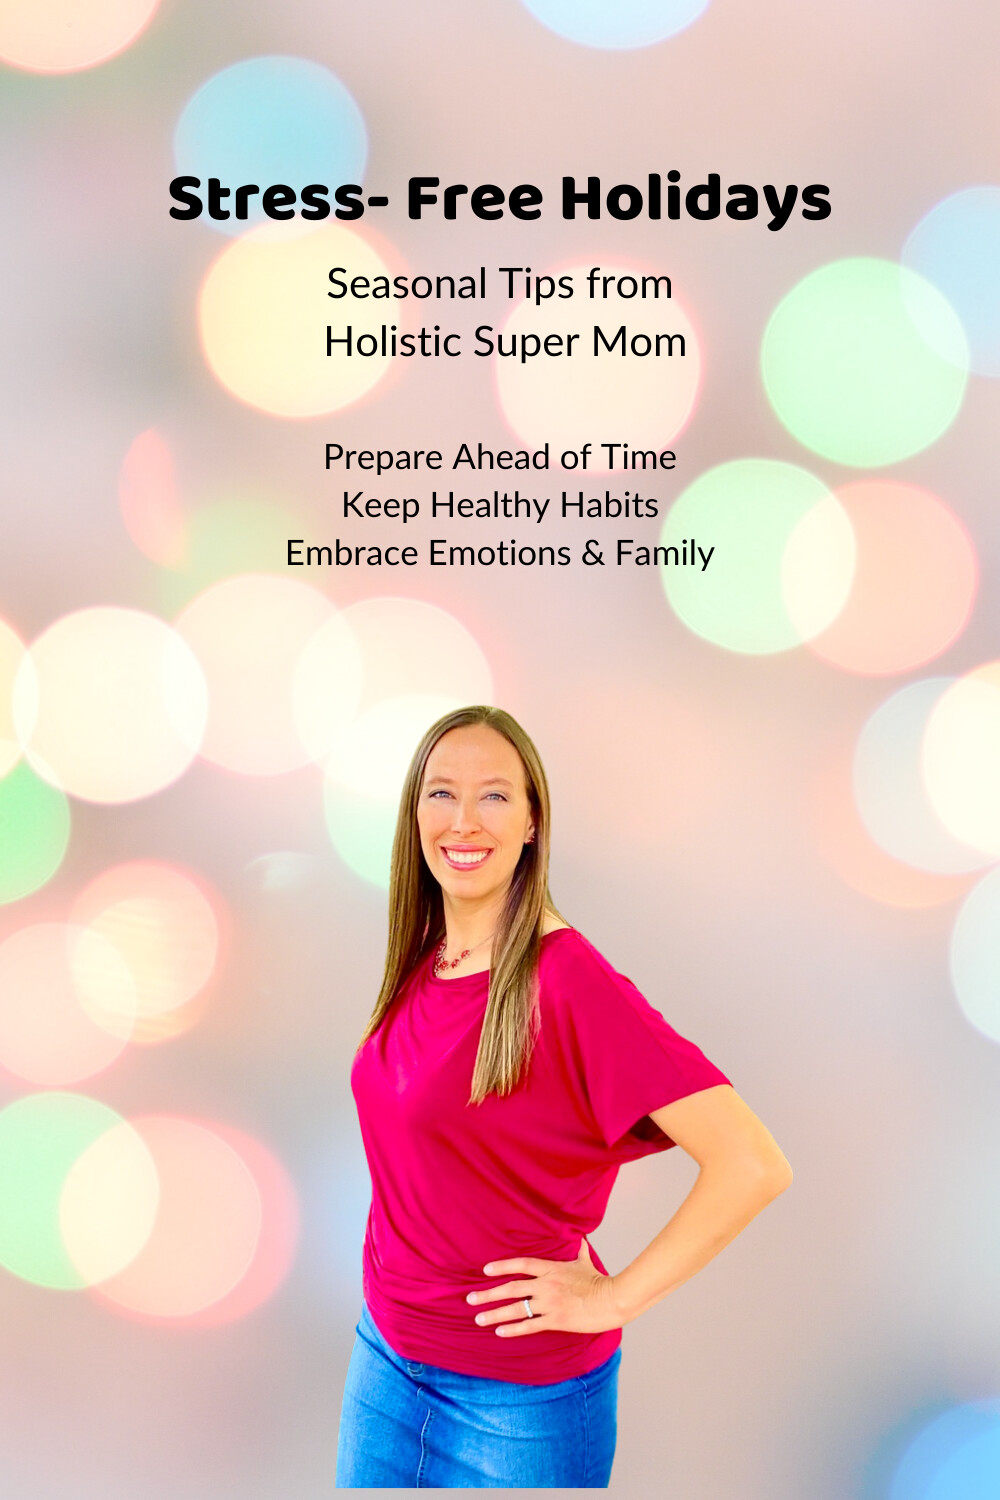 Seasonal Tips for Stress-Free Holidays